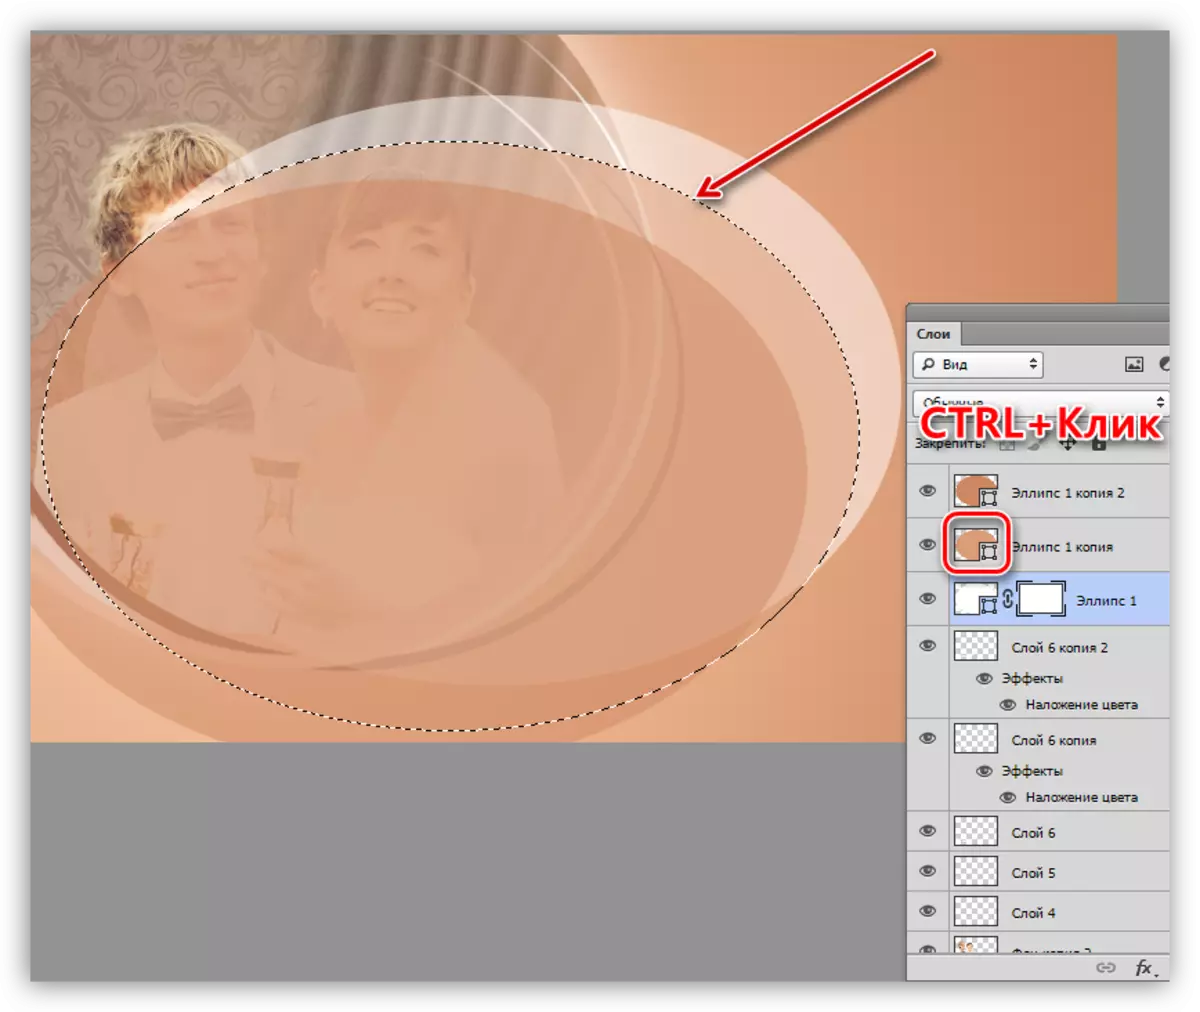 Photoshop లో అలంకరణ ఫోటోలు ఉన్నప్పుడు ఒక డెకర్ సృష్టించడానికి ఎలిప్సిస్ రూపం ఎంచుకున్న ప్రాంతం లోడ్